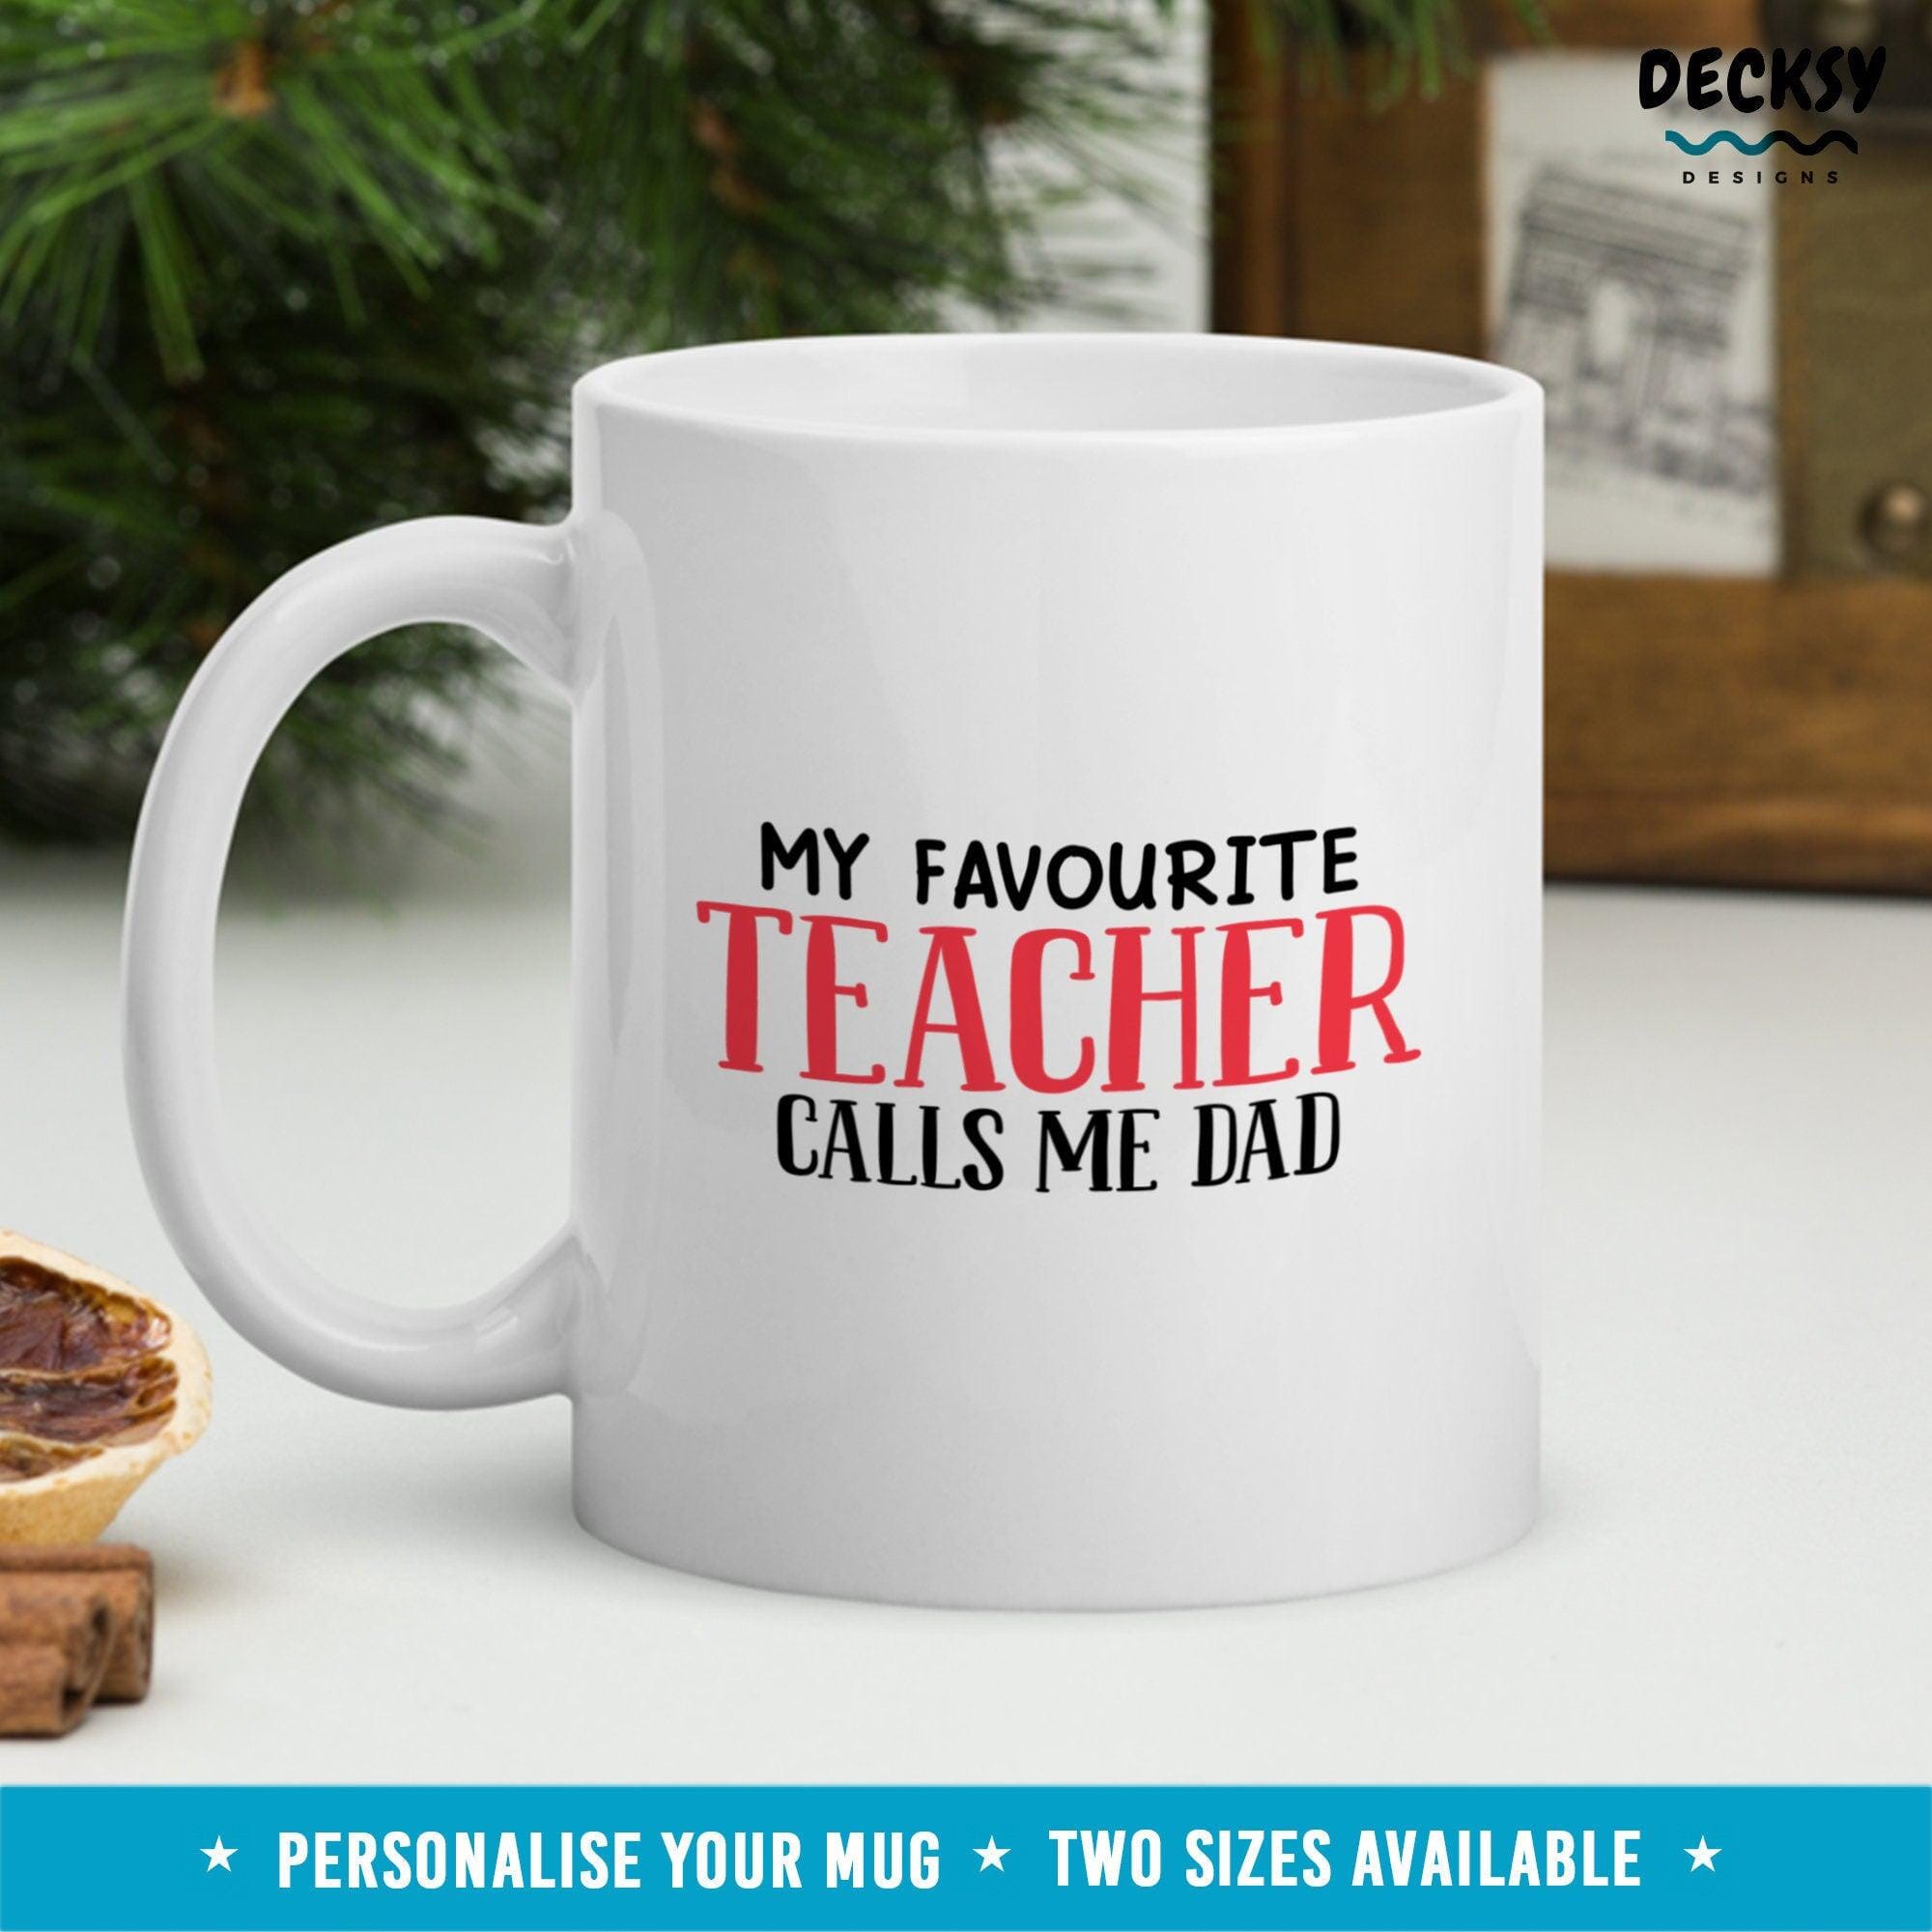 Funny Teacher Dad Mug, Fathers Day Gift-Home & Living:Kitchen & Dining:Drink & Barware:Drinkware:Mugs-DecksyDesigns-11 Oz-NO PERSONALISATION-DecksyDesigns